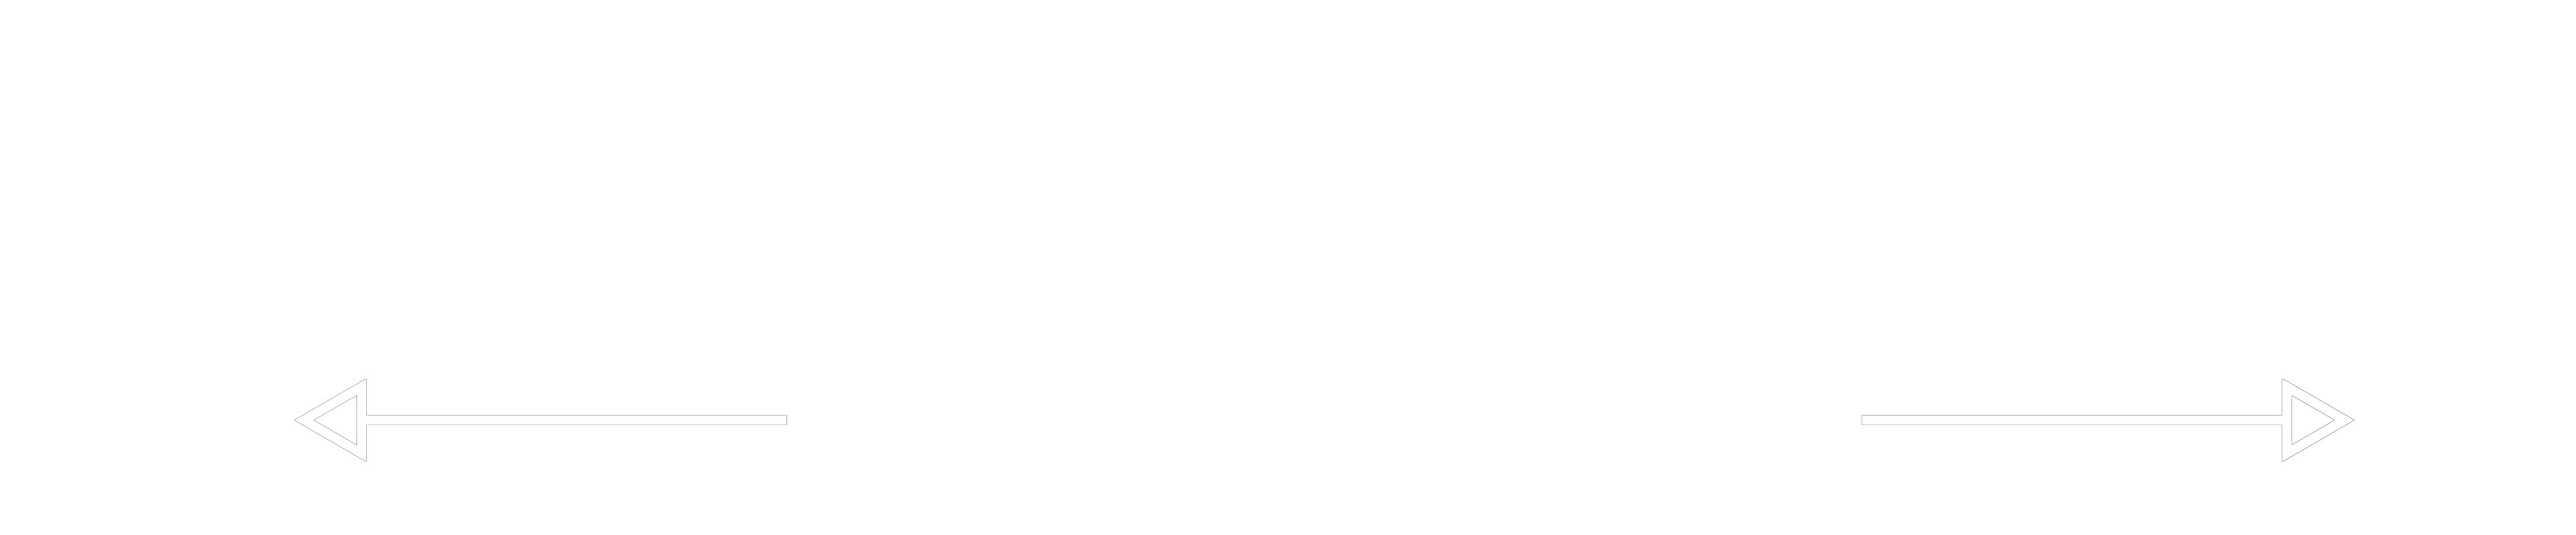 The Immersive Design Summit